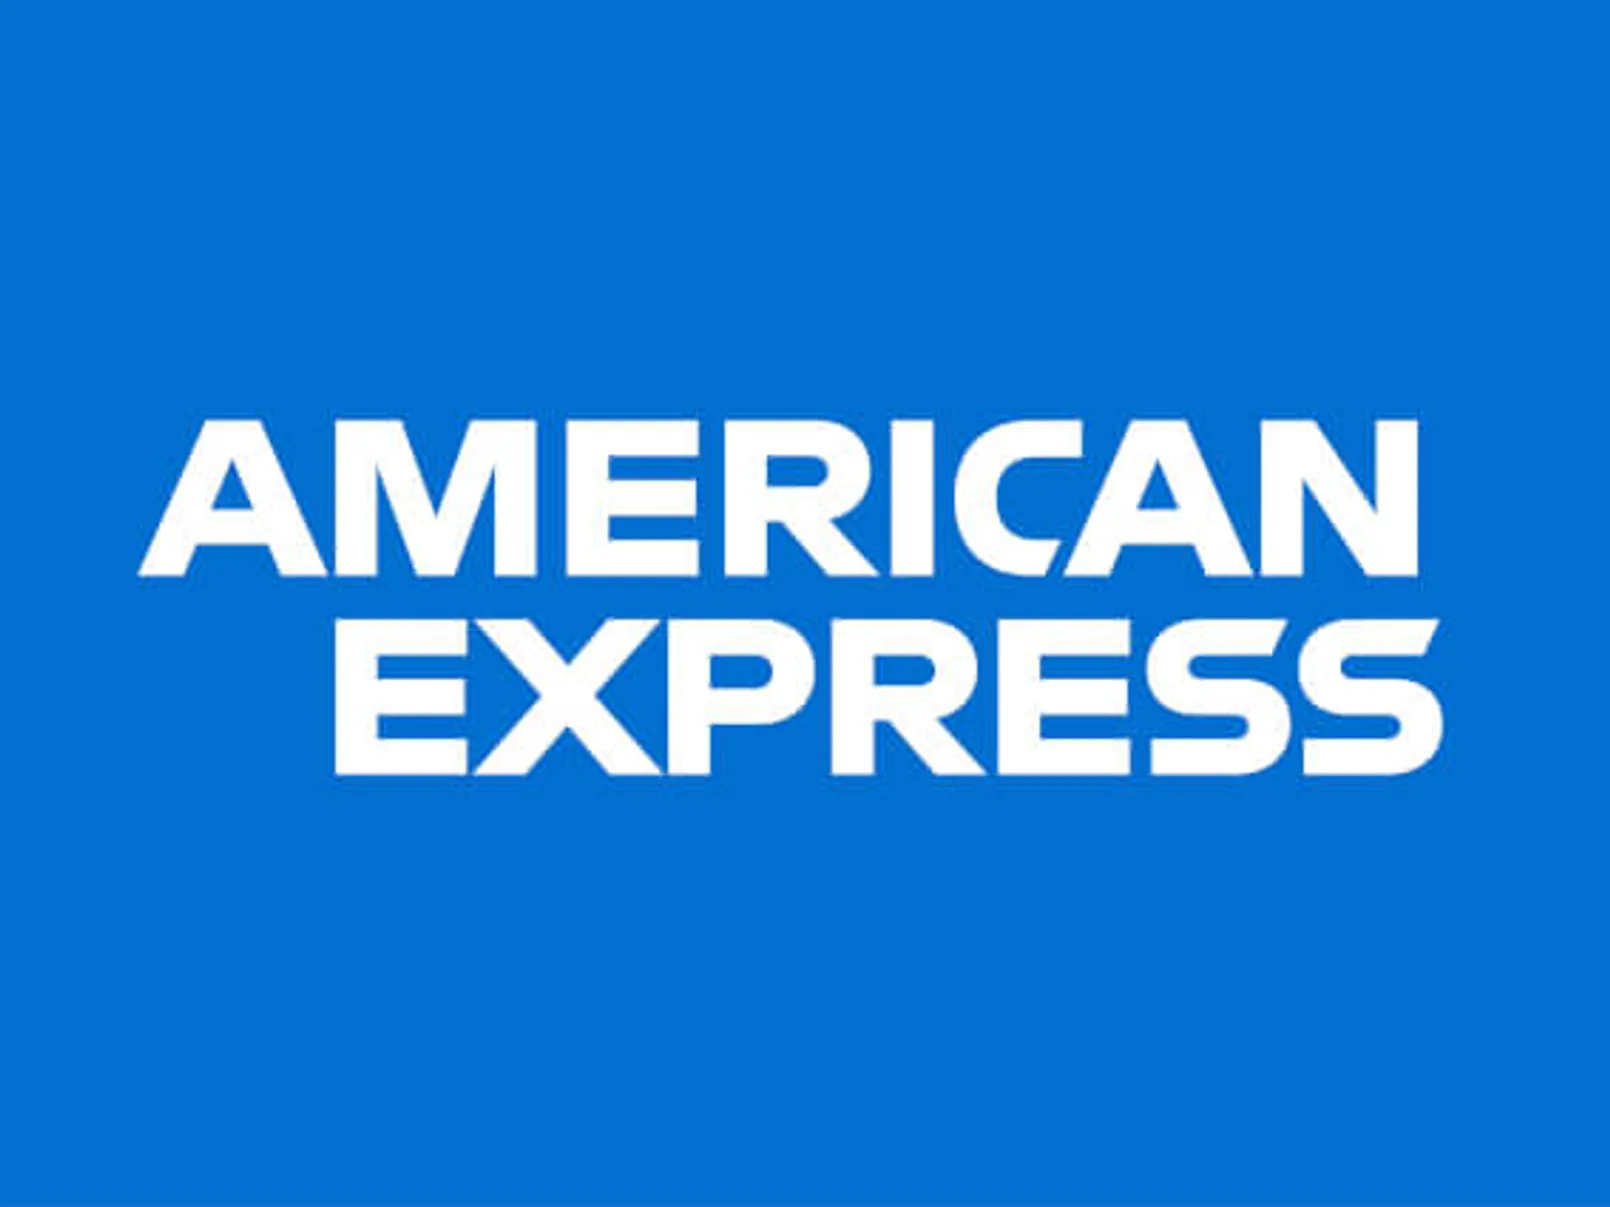 American Express Pentagram Boteco Design 04.jpg